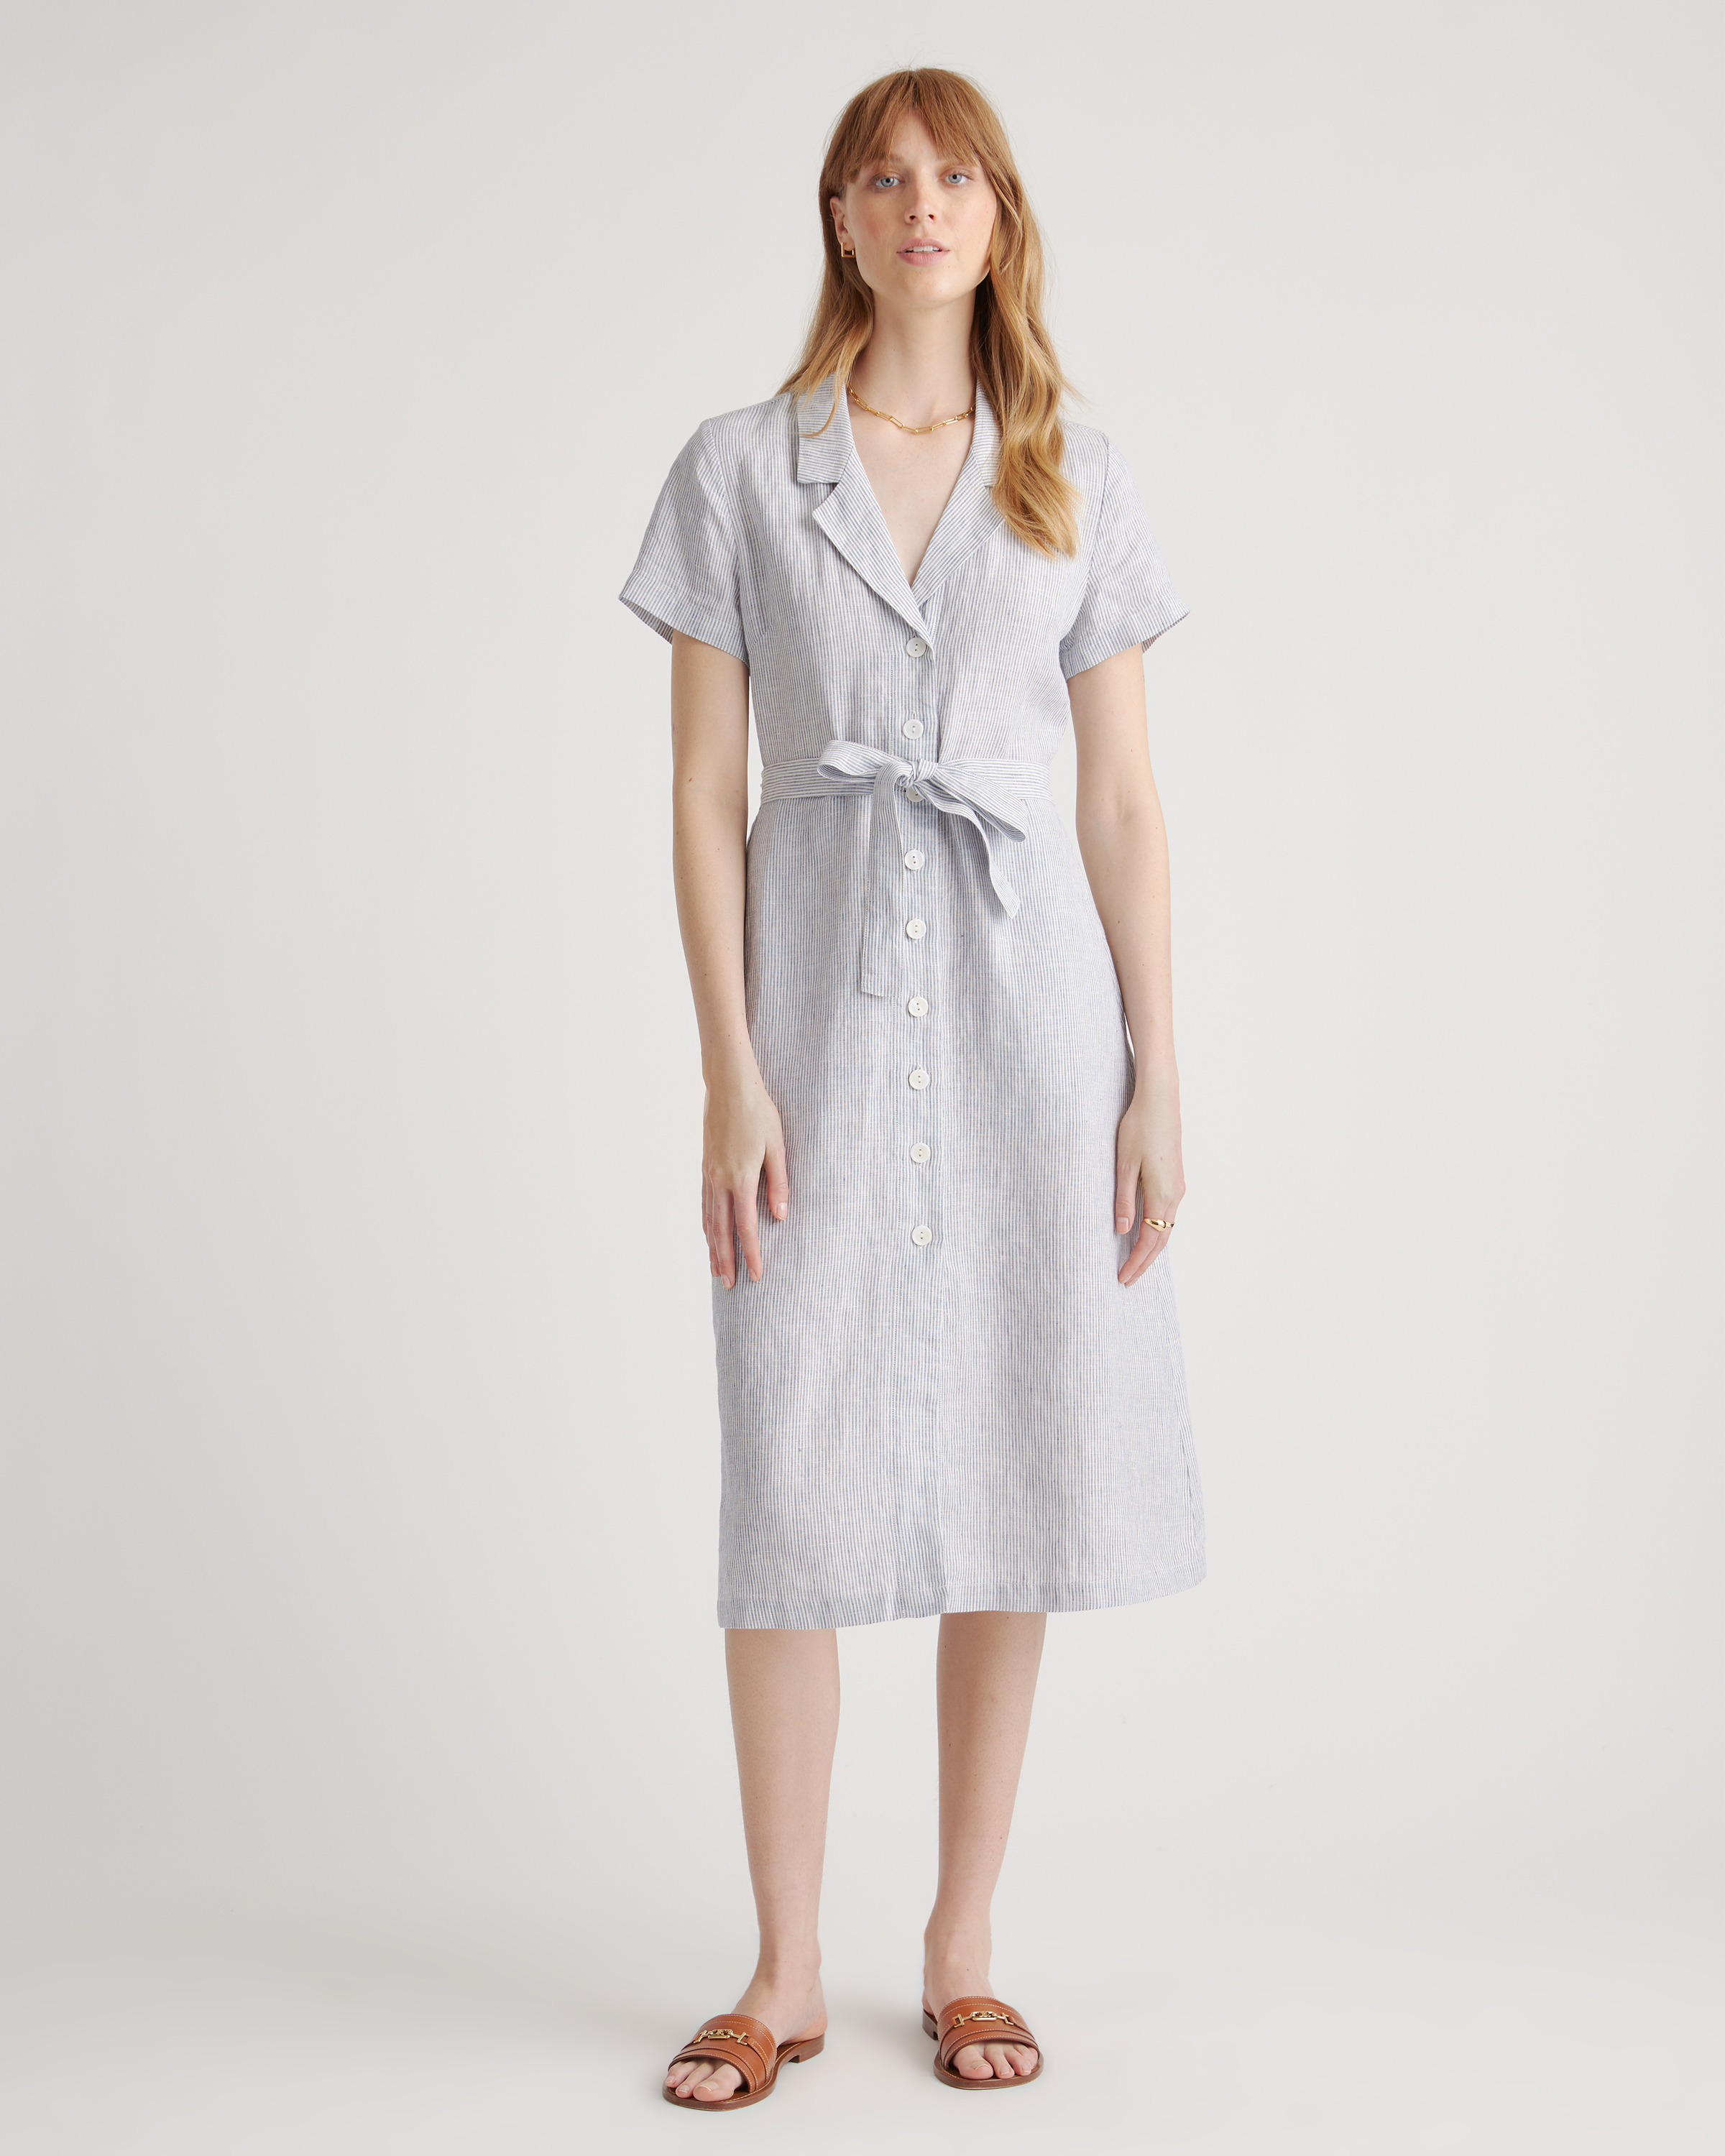 Dresses for Mature Women | Jolie Vaughan Boutique – Jolie Vaughan Mature  Women's Online Clothing Boutique